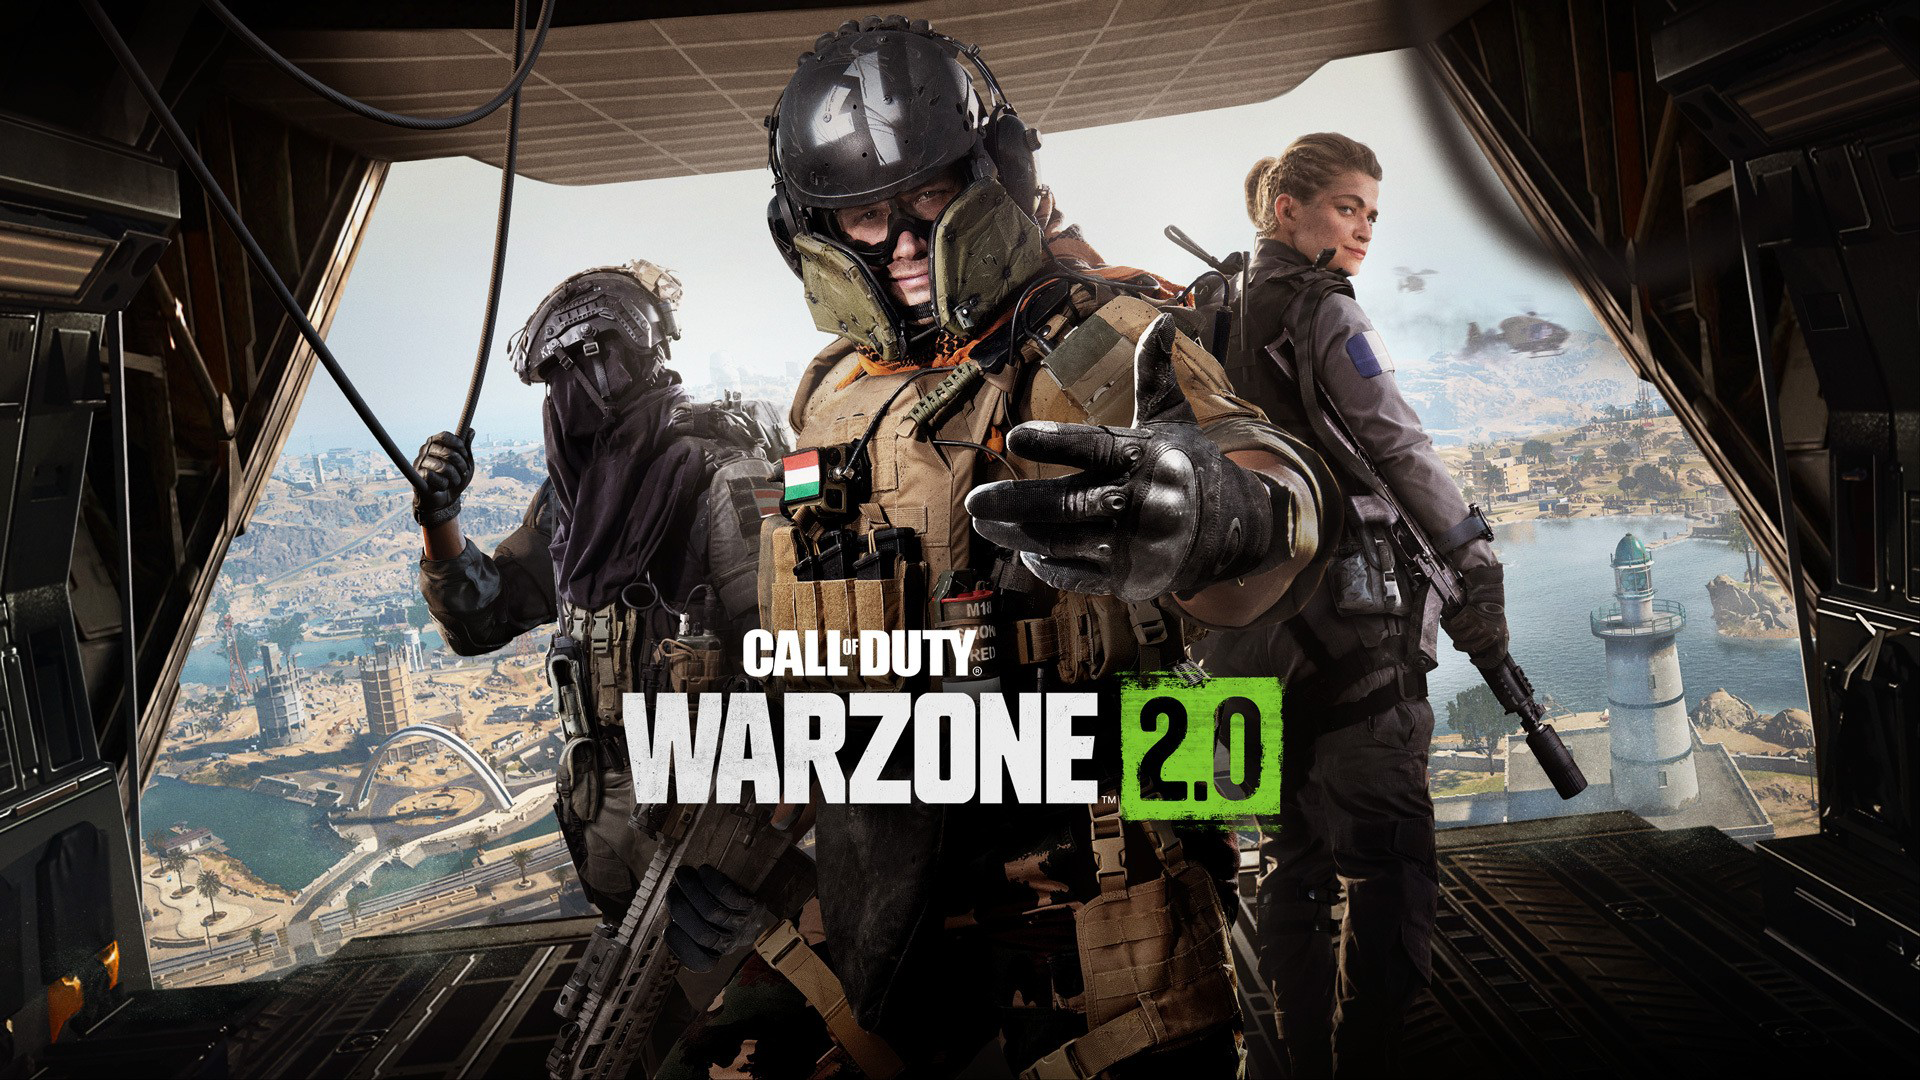 How to Fix Purchase Modern Warfare 2 Error in Warzone 2